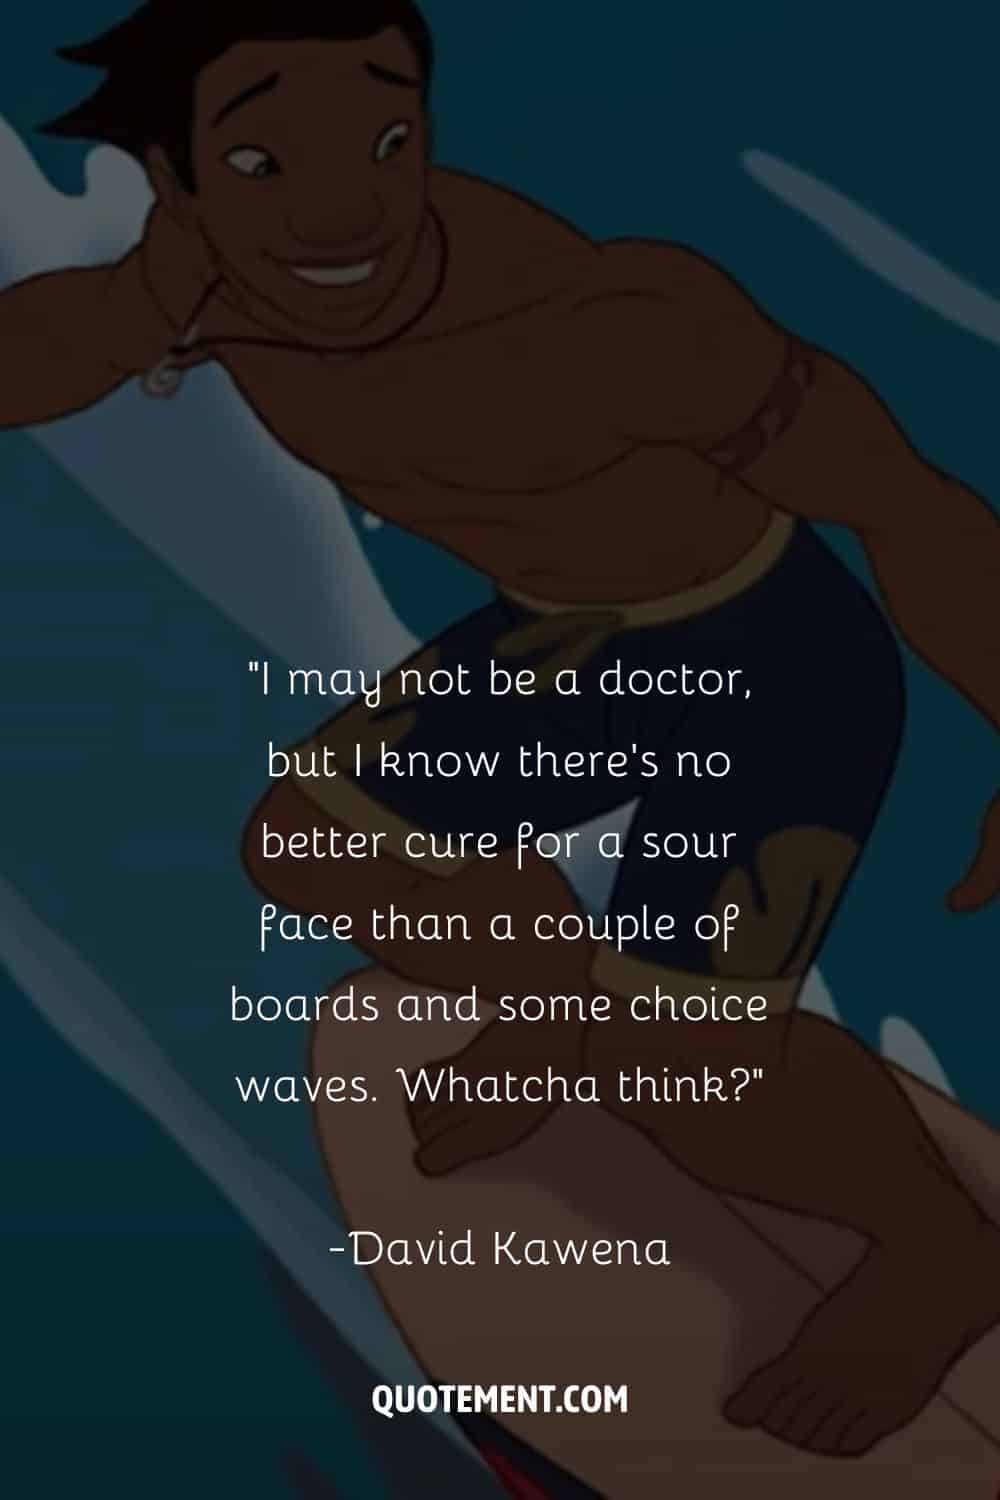 David Kawena surfing representing the best Lilo & Stitch quote